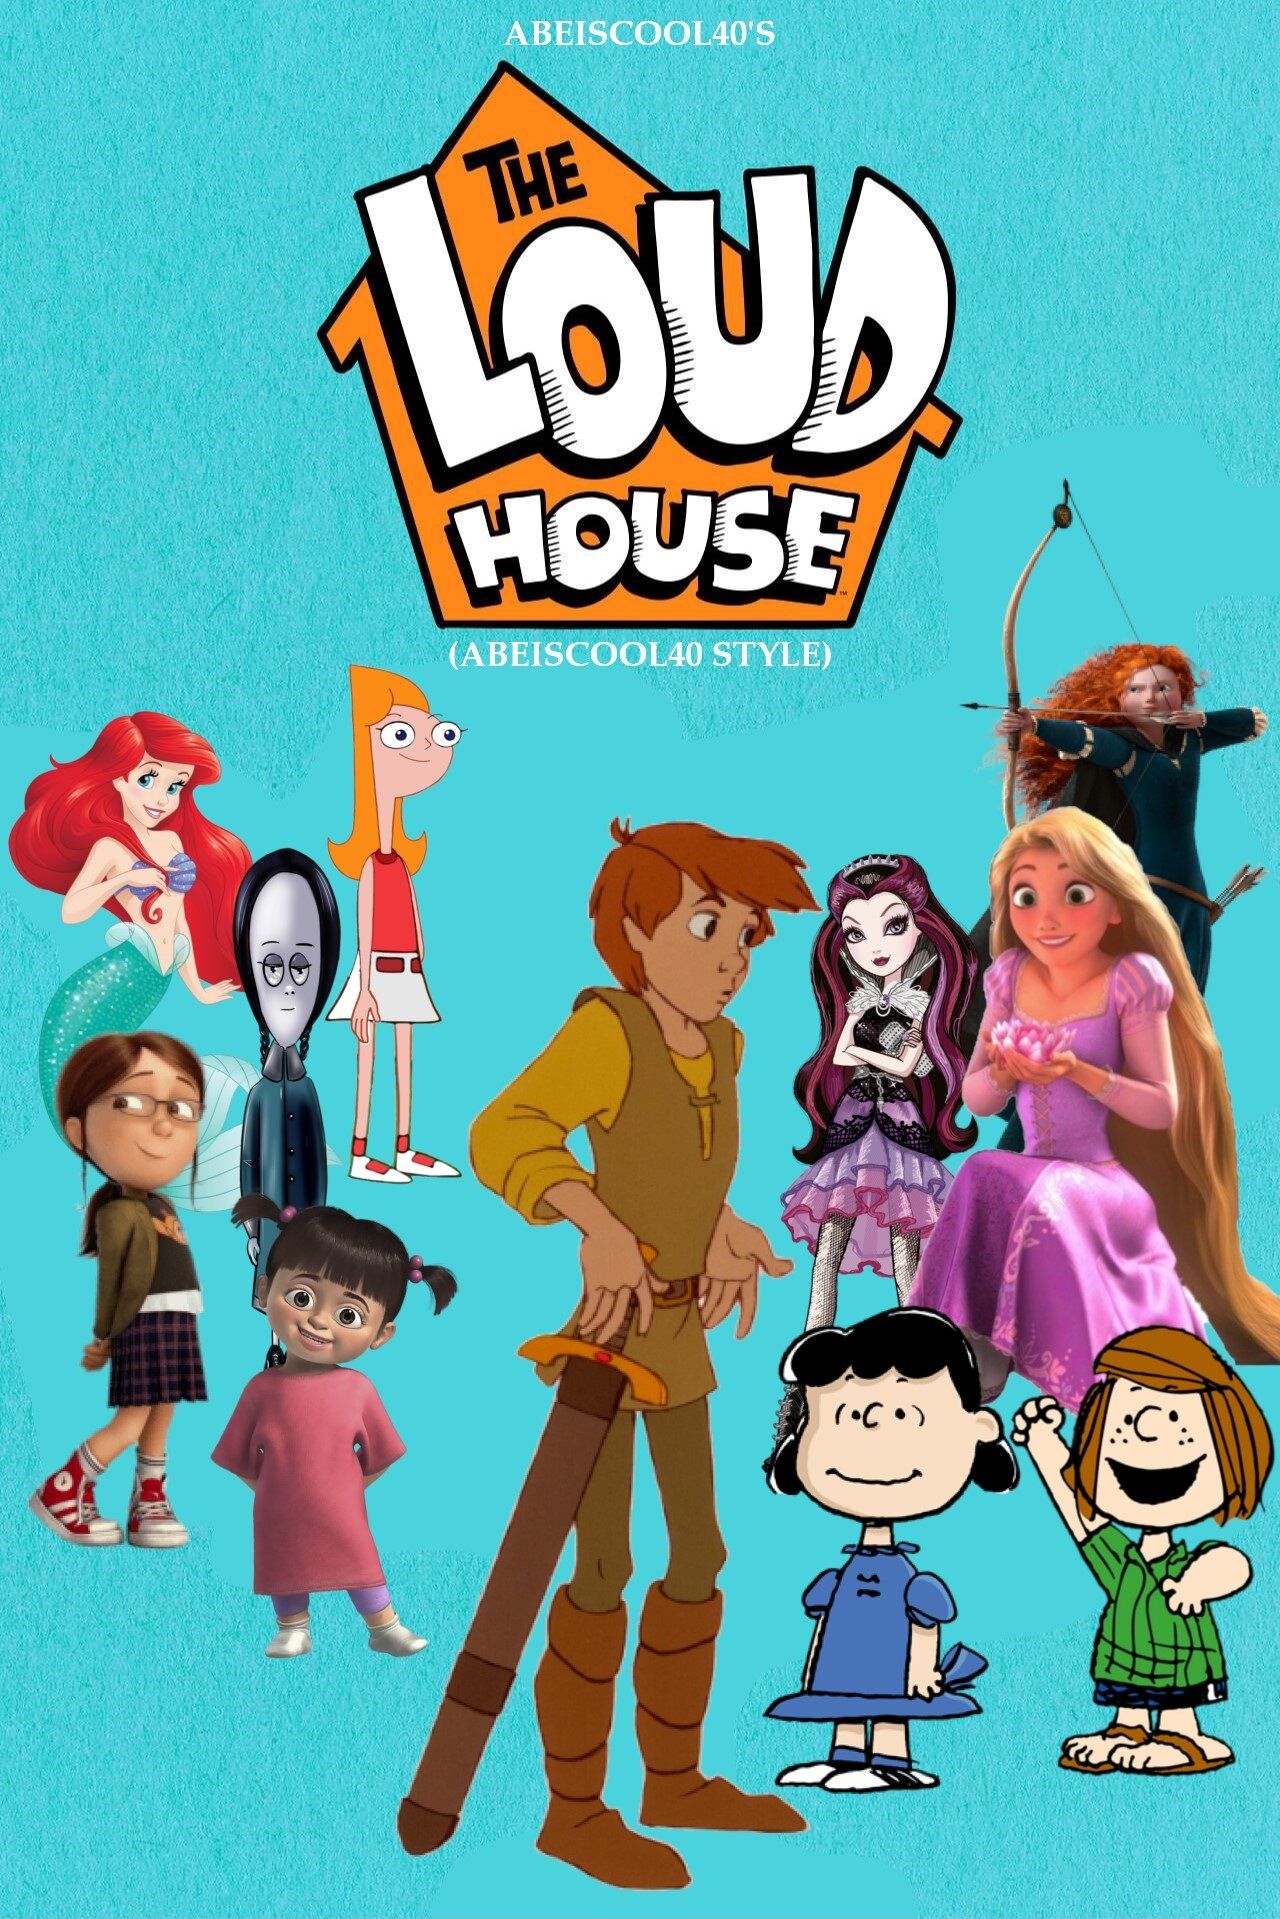 The Loud House (Abeiscool40 Style), FictionRulezForever Wiki